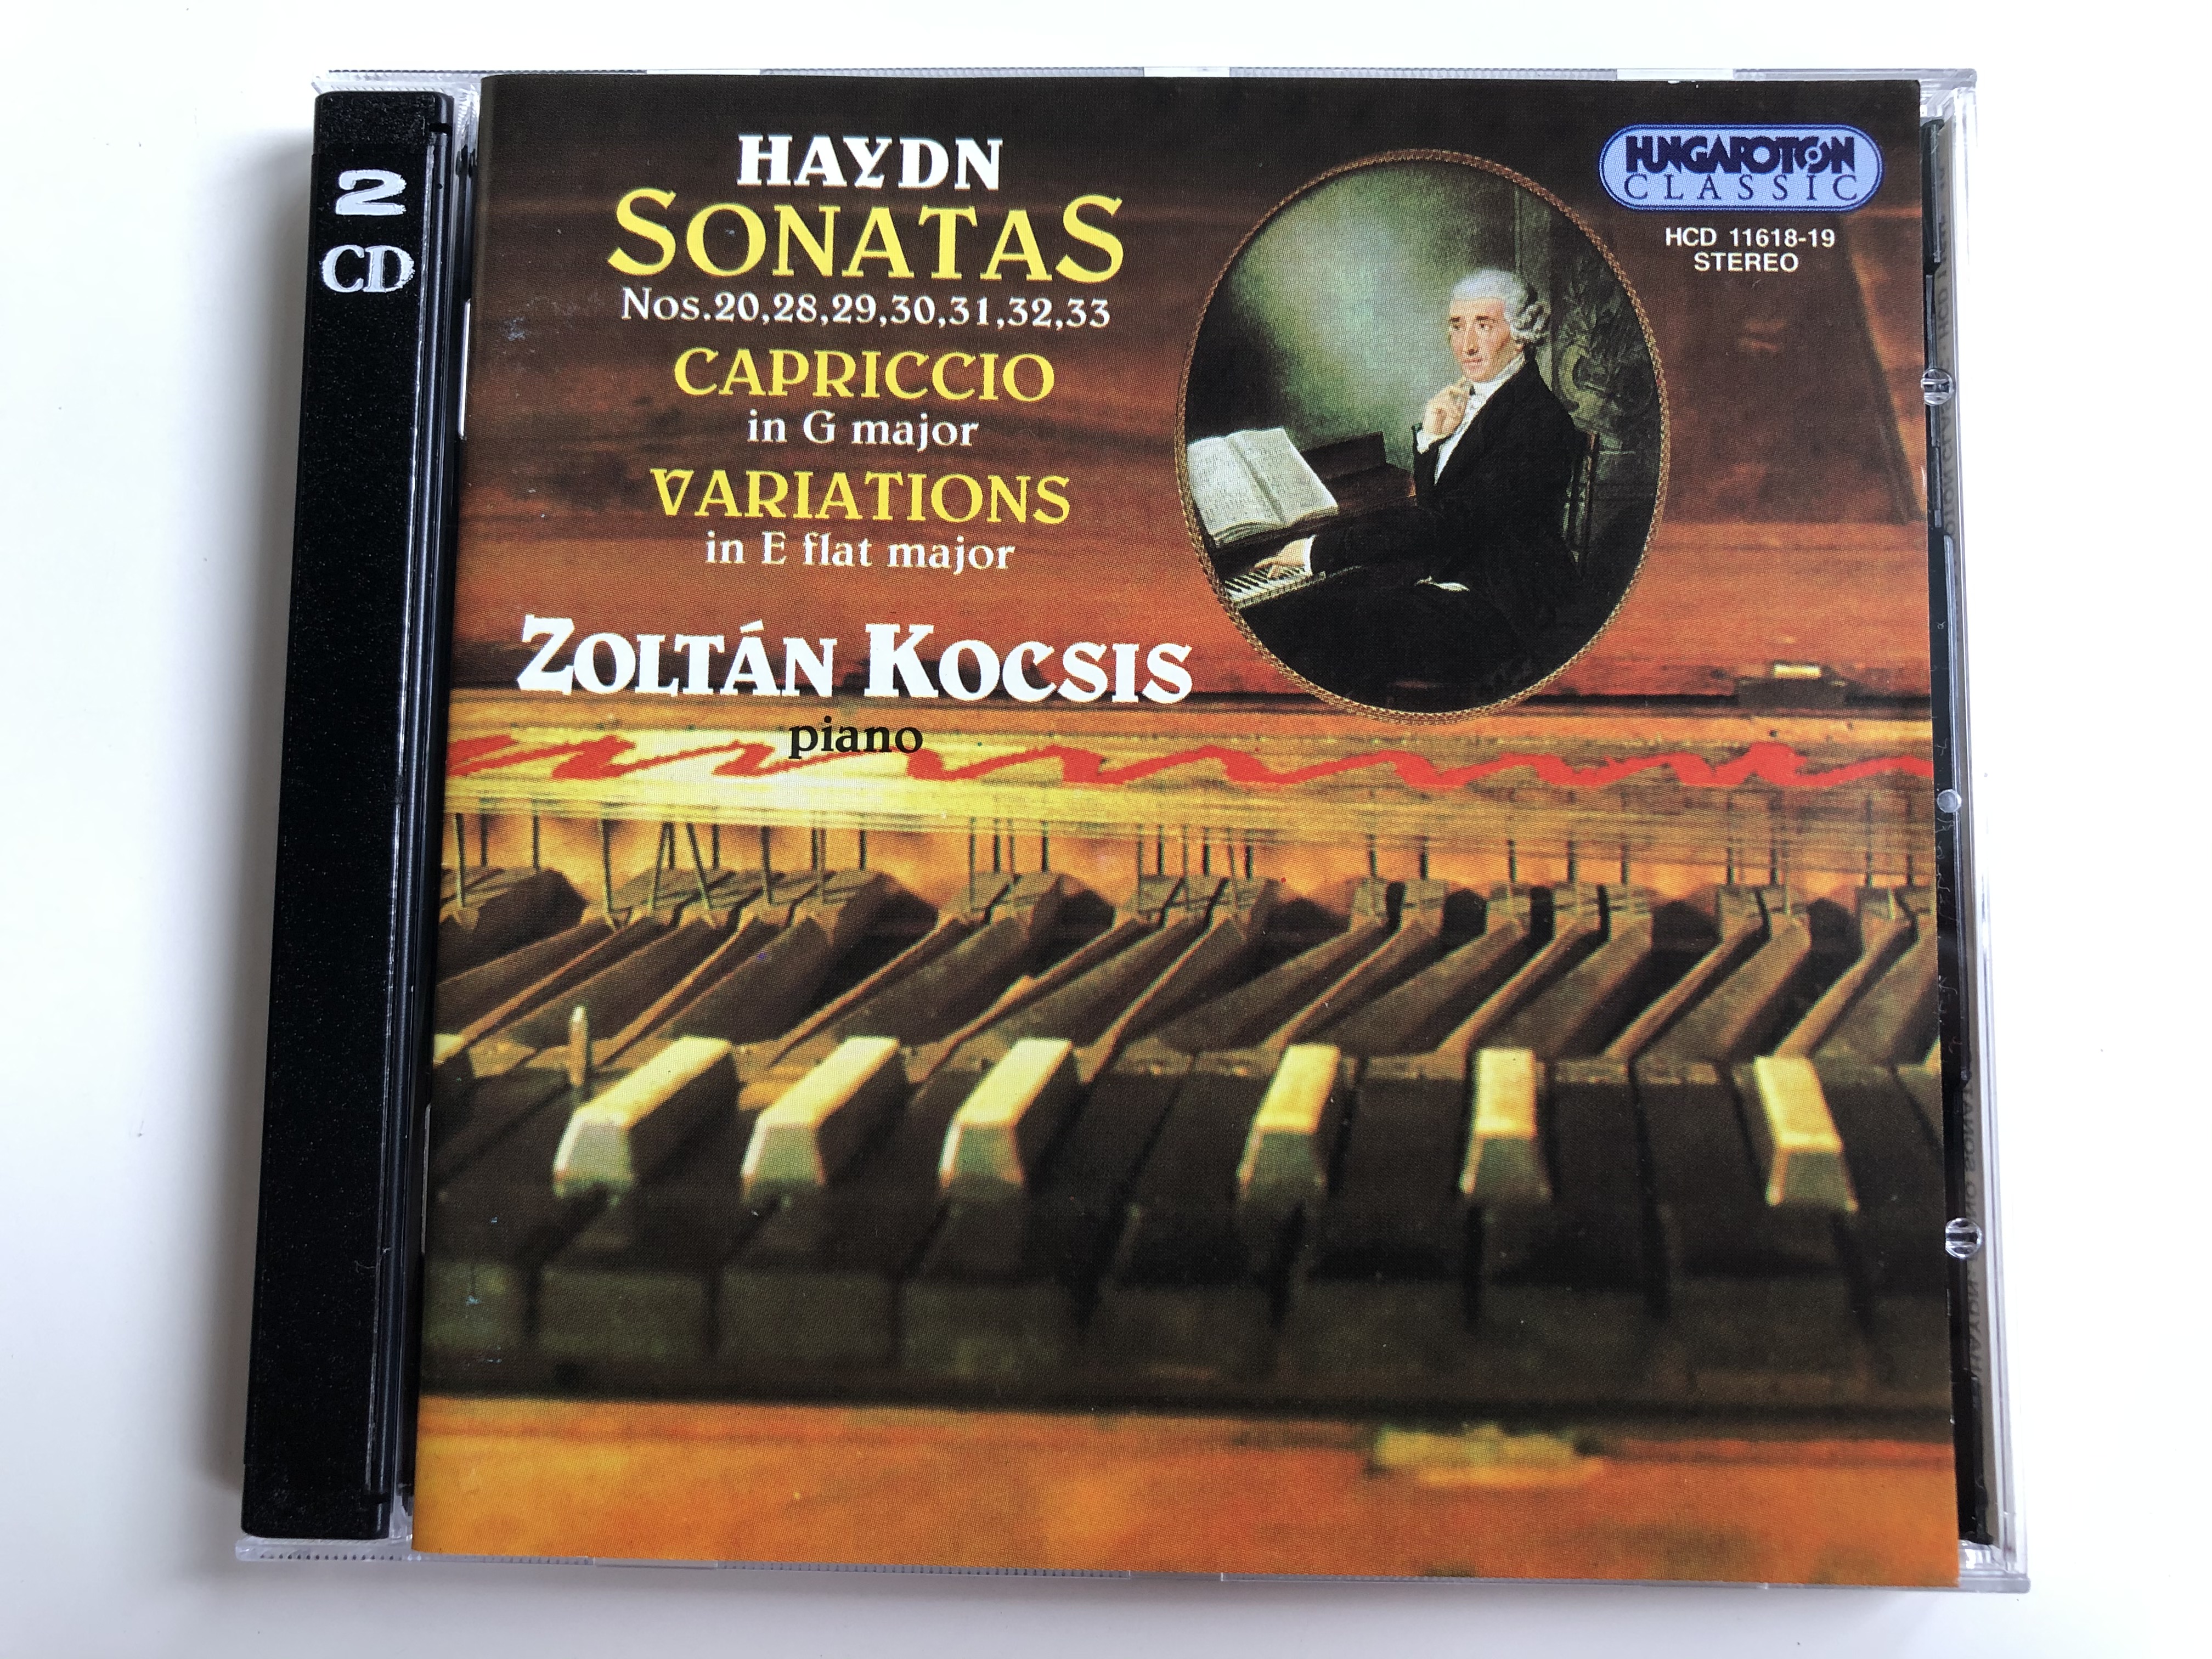 haydn-sonatas-nos.-20-28-29-30-31-32-33-capriccio-in-g-major-variations-in-e-flat-major-zolt-n-kocsis-piano-hungaroton-classic-2x-audio-cd-1996-stereo-hcd-11618-19-1-.jpg